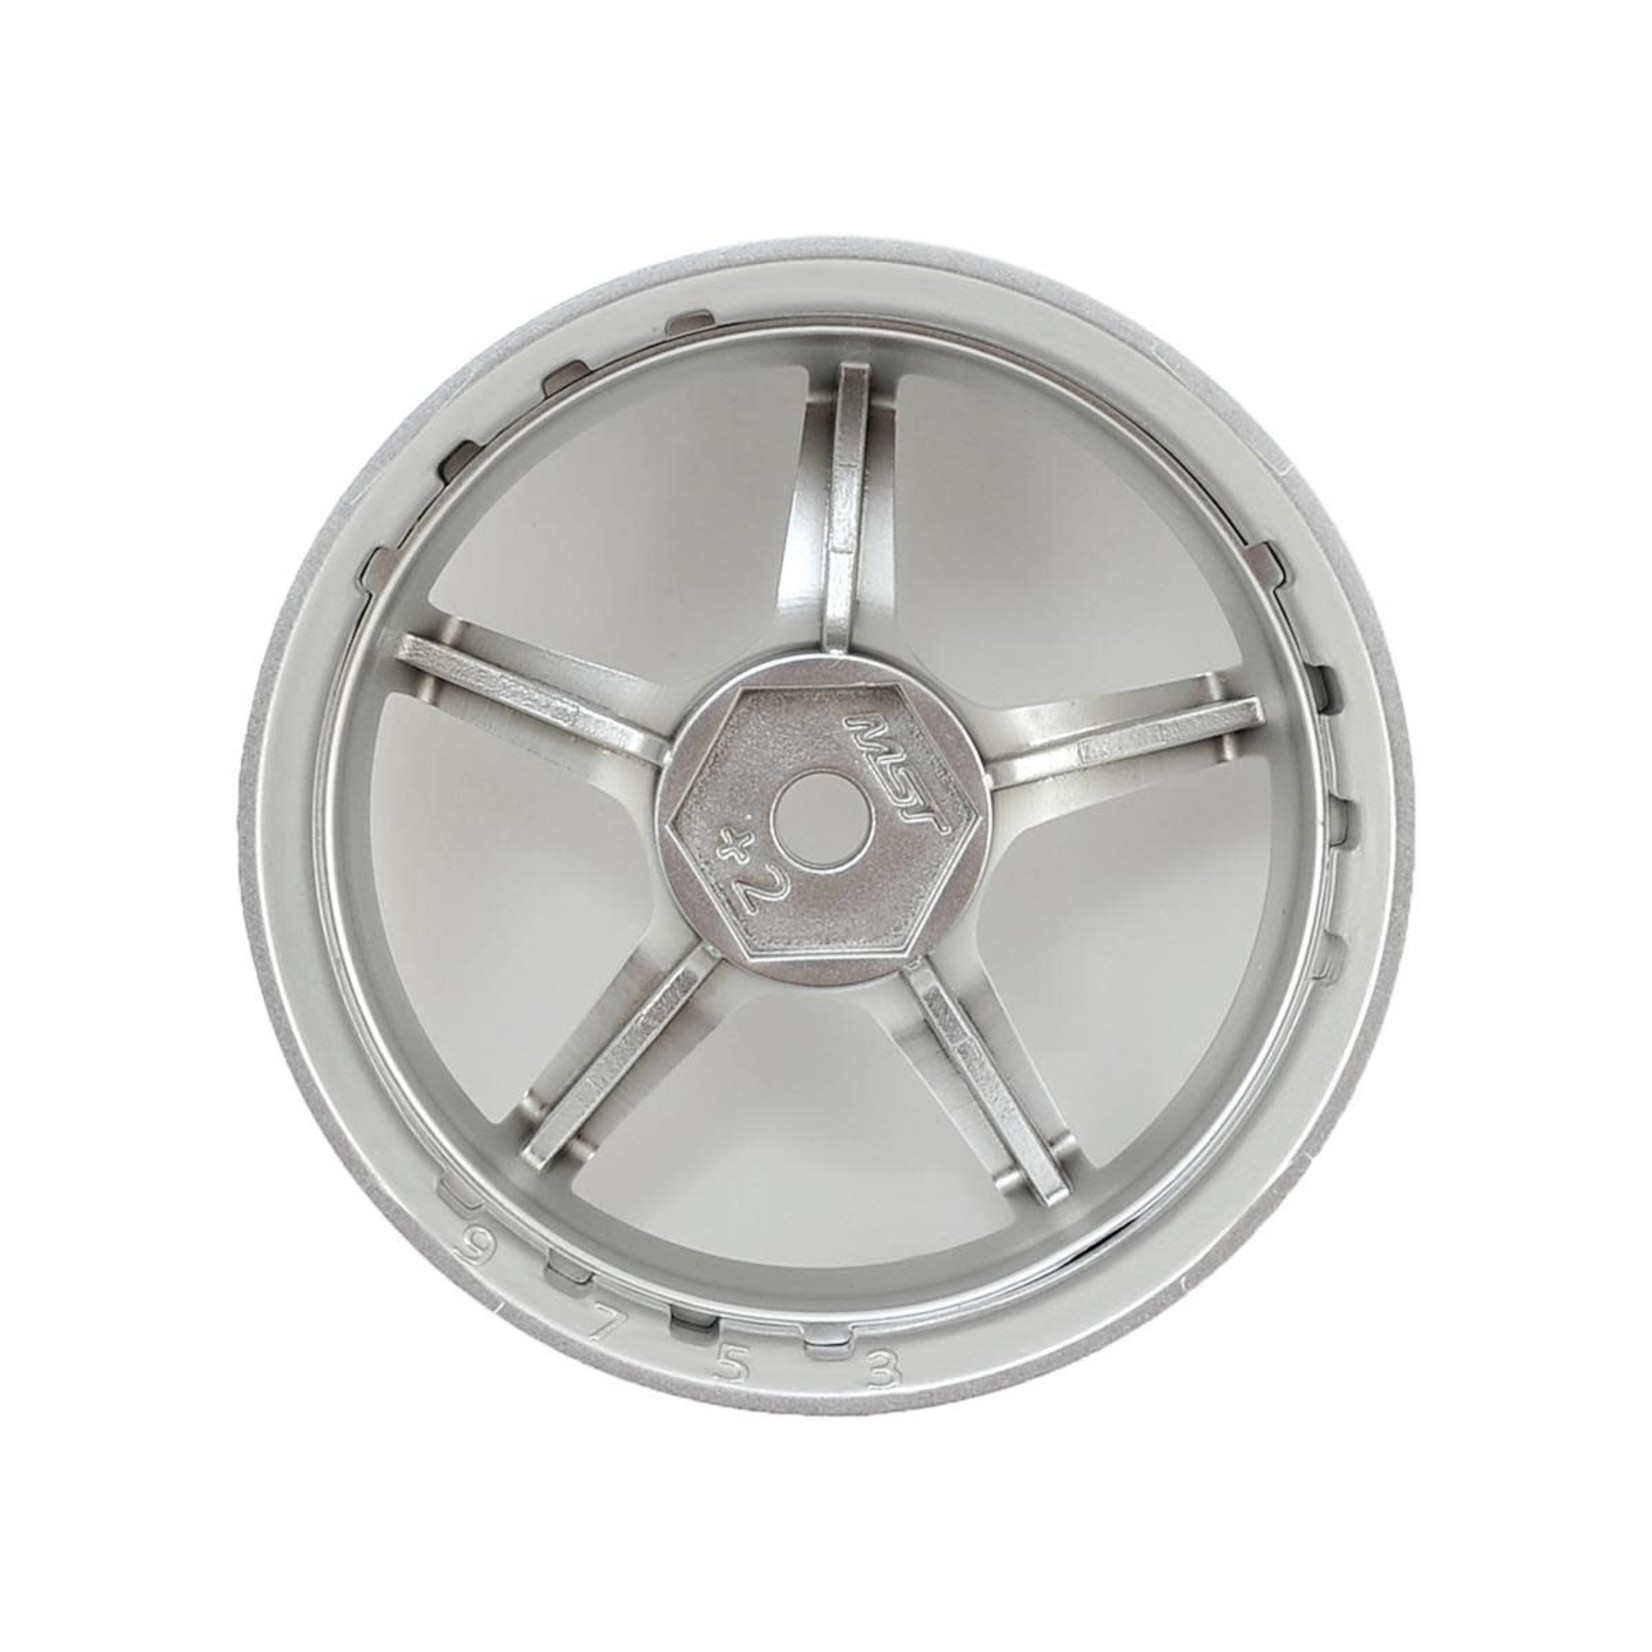 MST MST GT Wheel Set (Chrome/Matte Silver) (4) (Offset Changeable) w/12mm Hex #832109FS